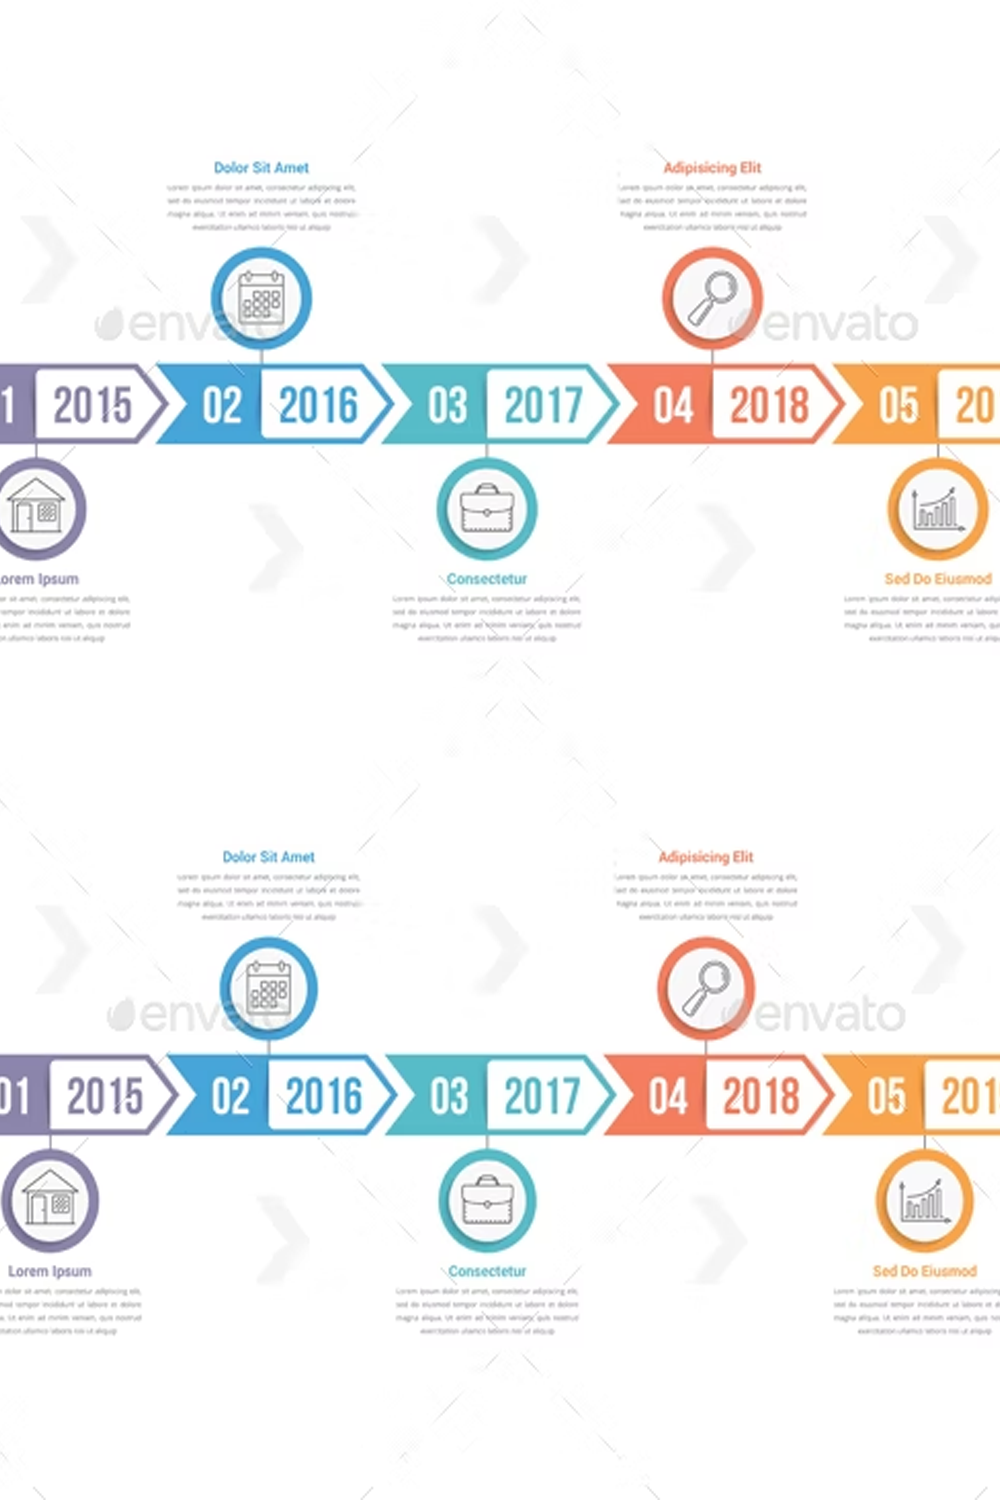 Illustrations timeline infographics of pinterest.